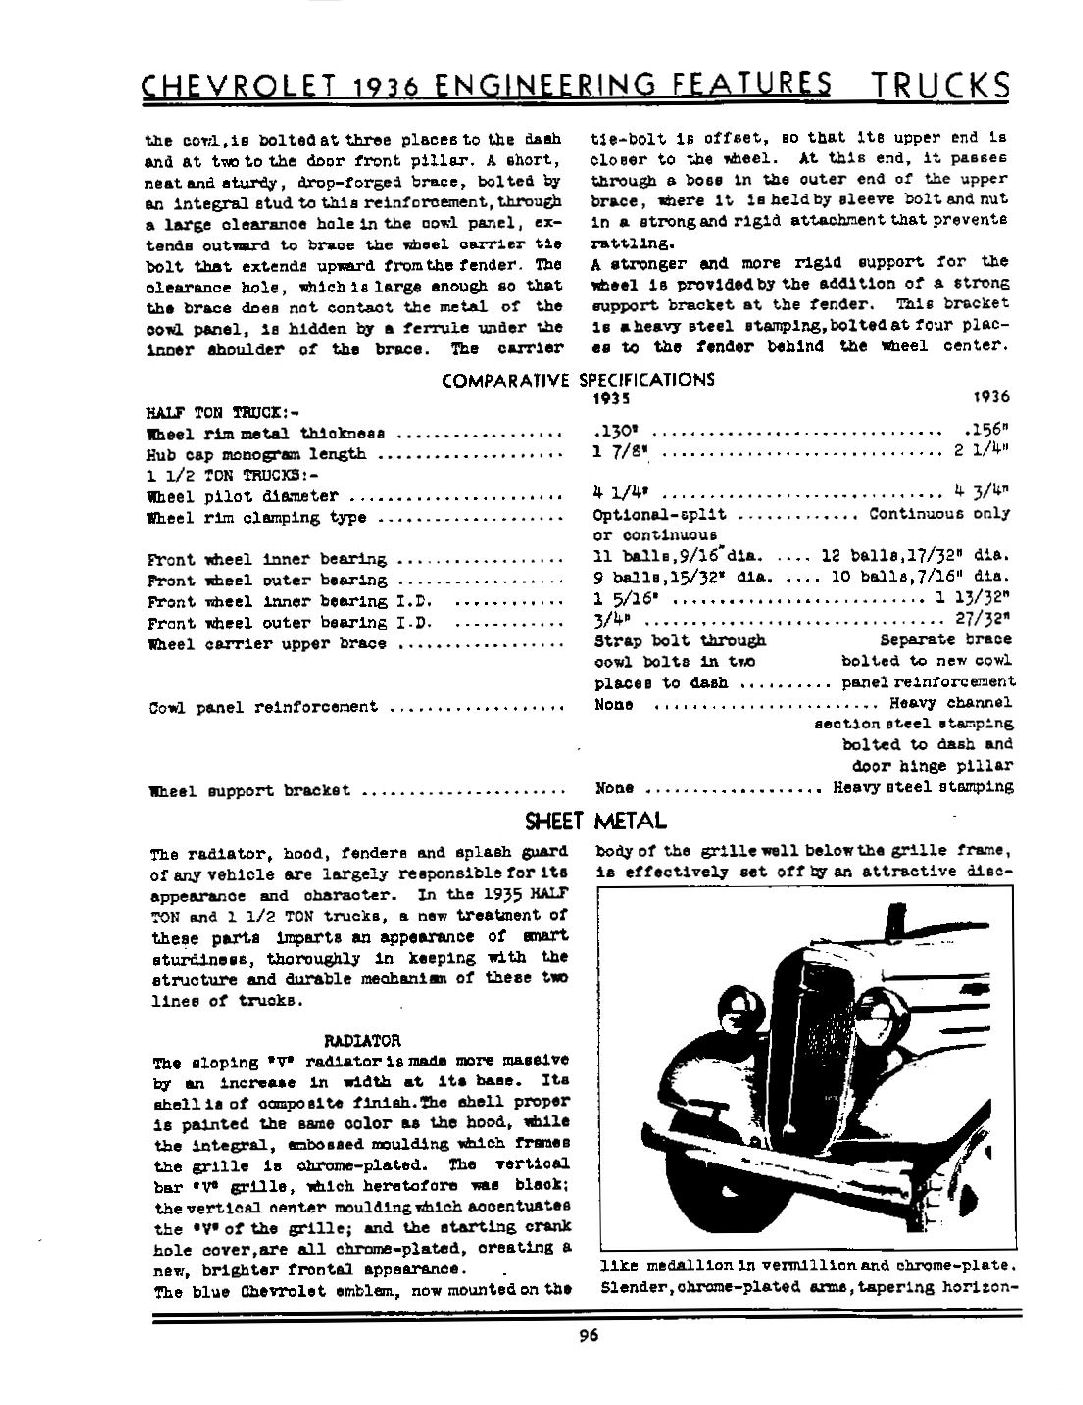 1936_Chevrolet_Engineering_Features-096